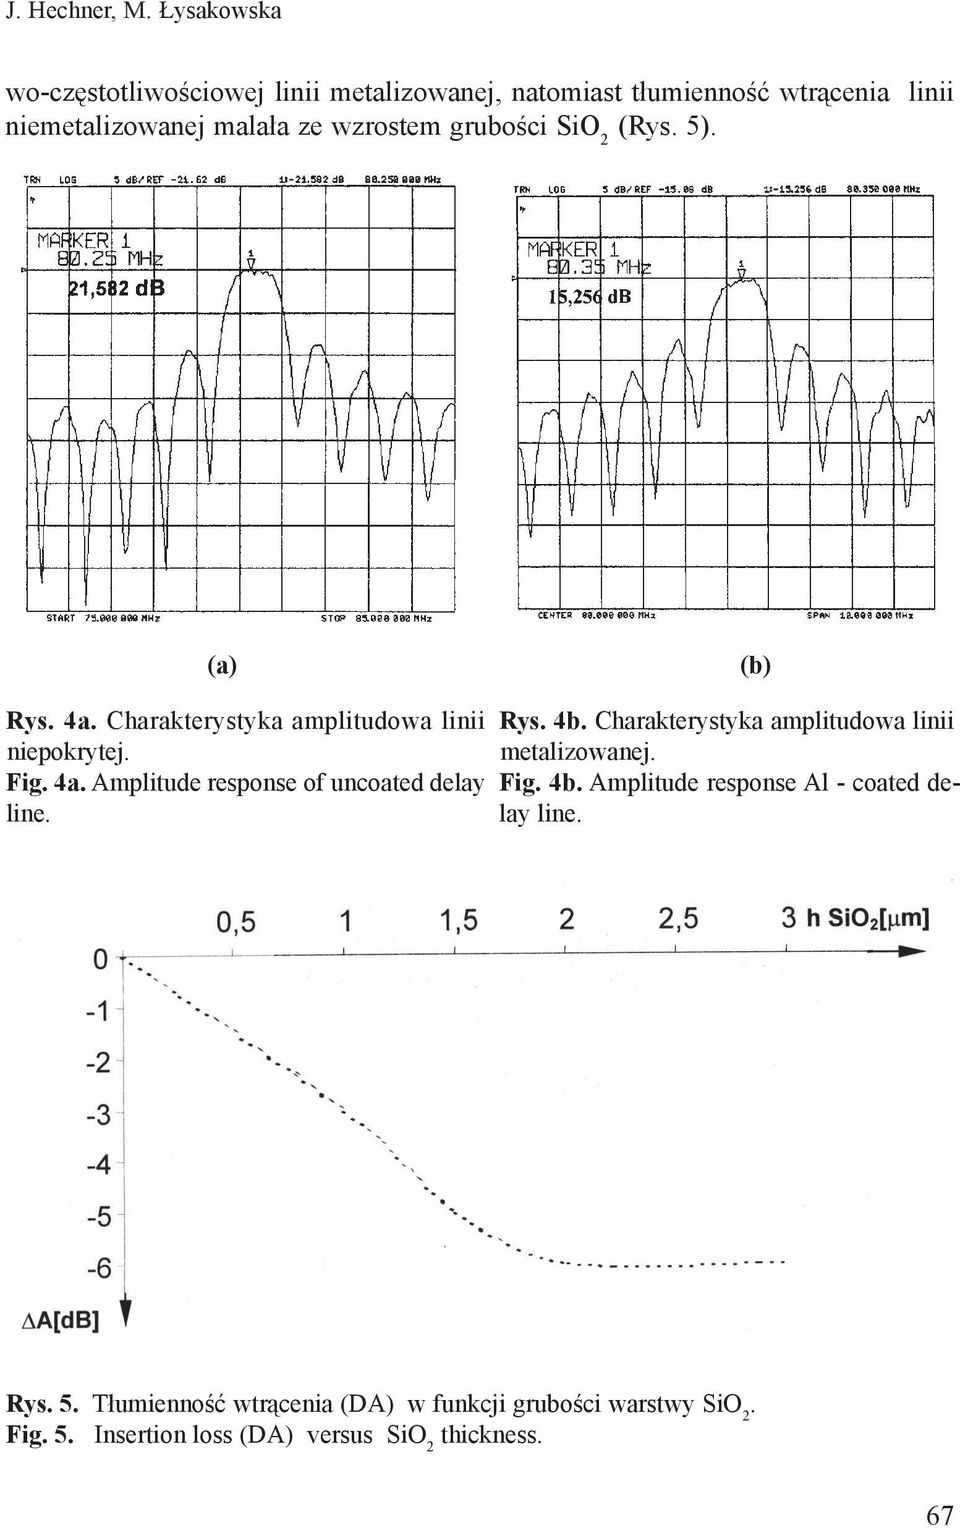 grubo ci SiO 2 (Rys. 5). (a) (b) Rys. 4a. Charakterystyka amplitudowa linii niepokrytej. Fig. 4a. Amplitude response of uncoated delay line.